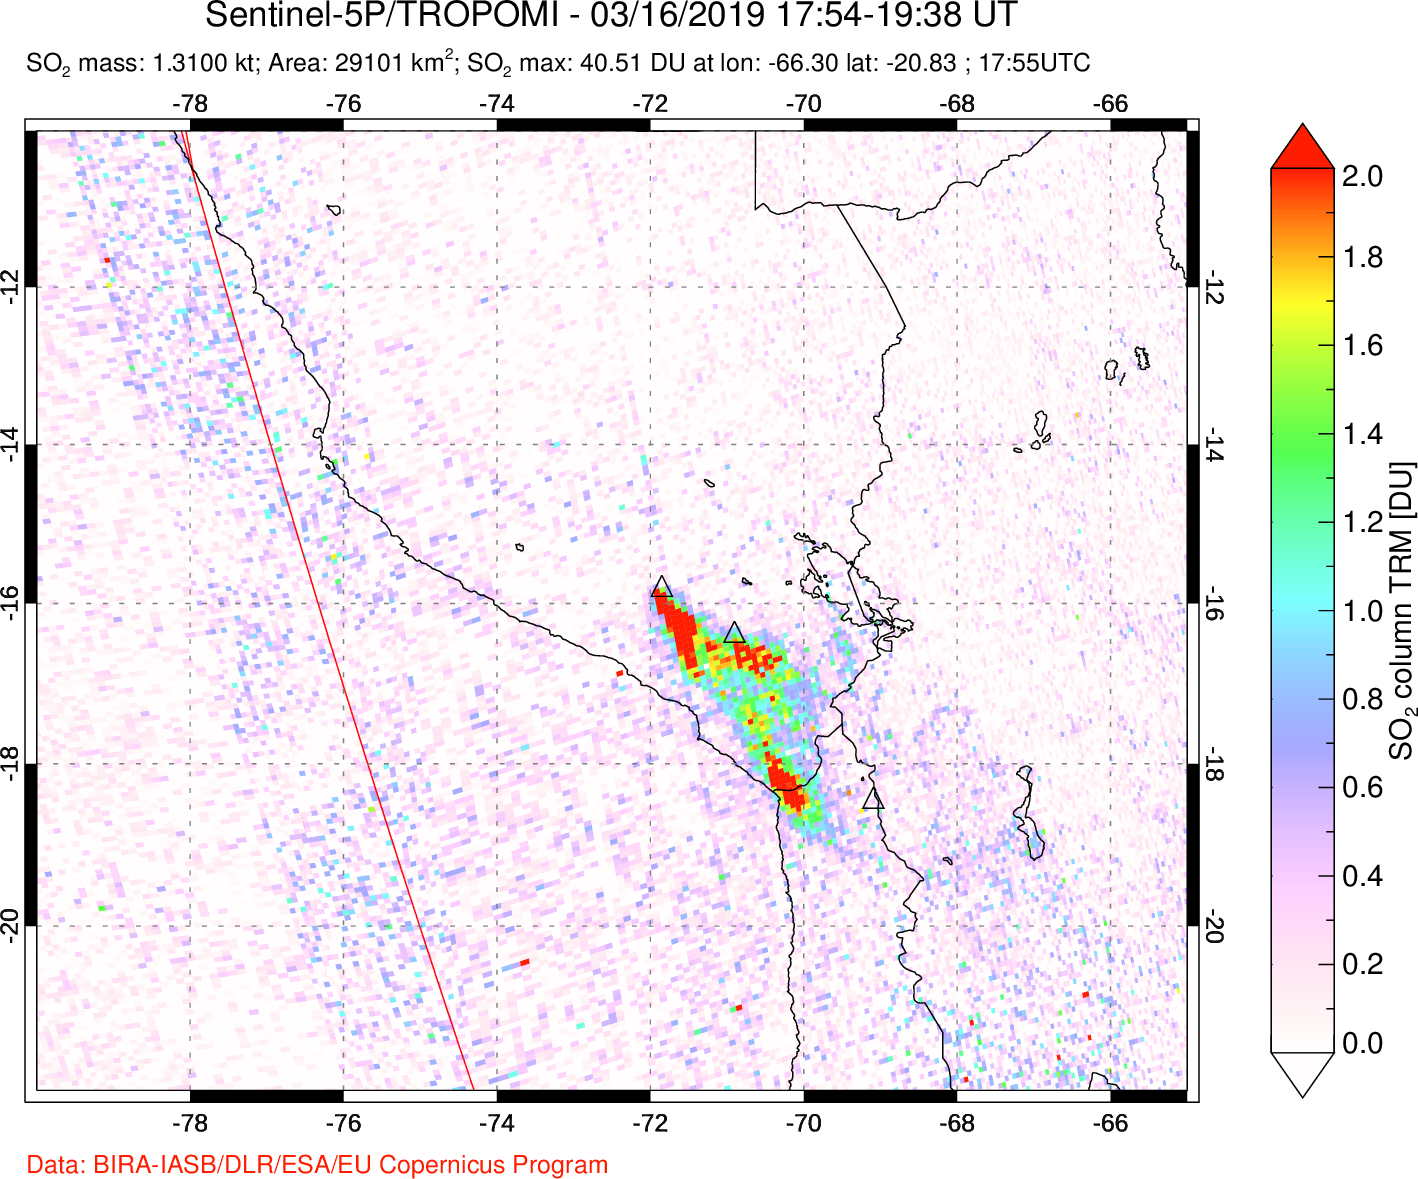 A sulfur dioxide image over Peru on Mar 16, 2019.